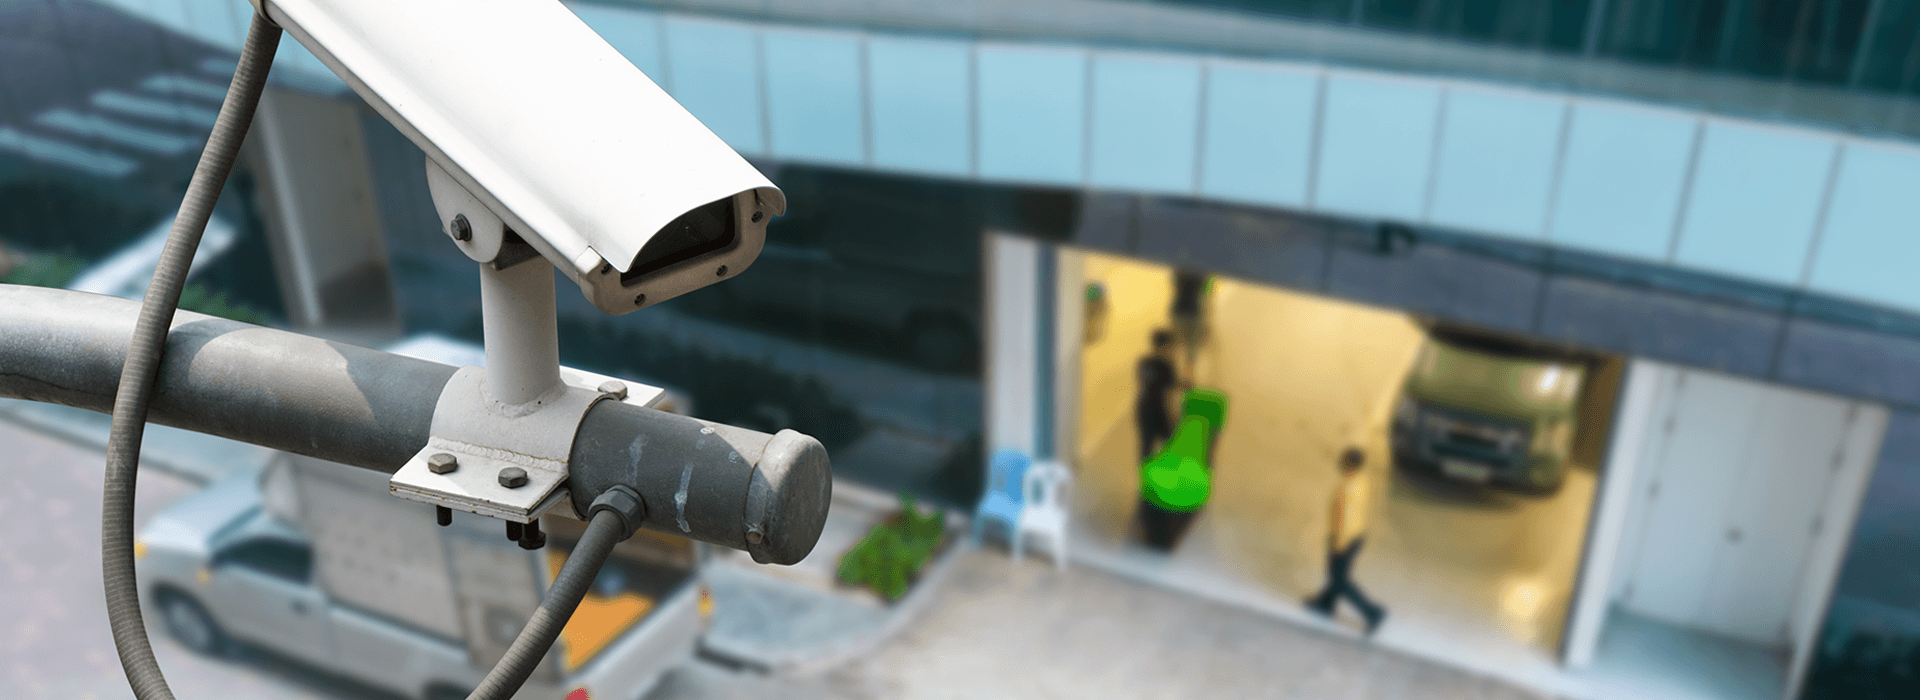 surveillance systems 